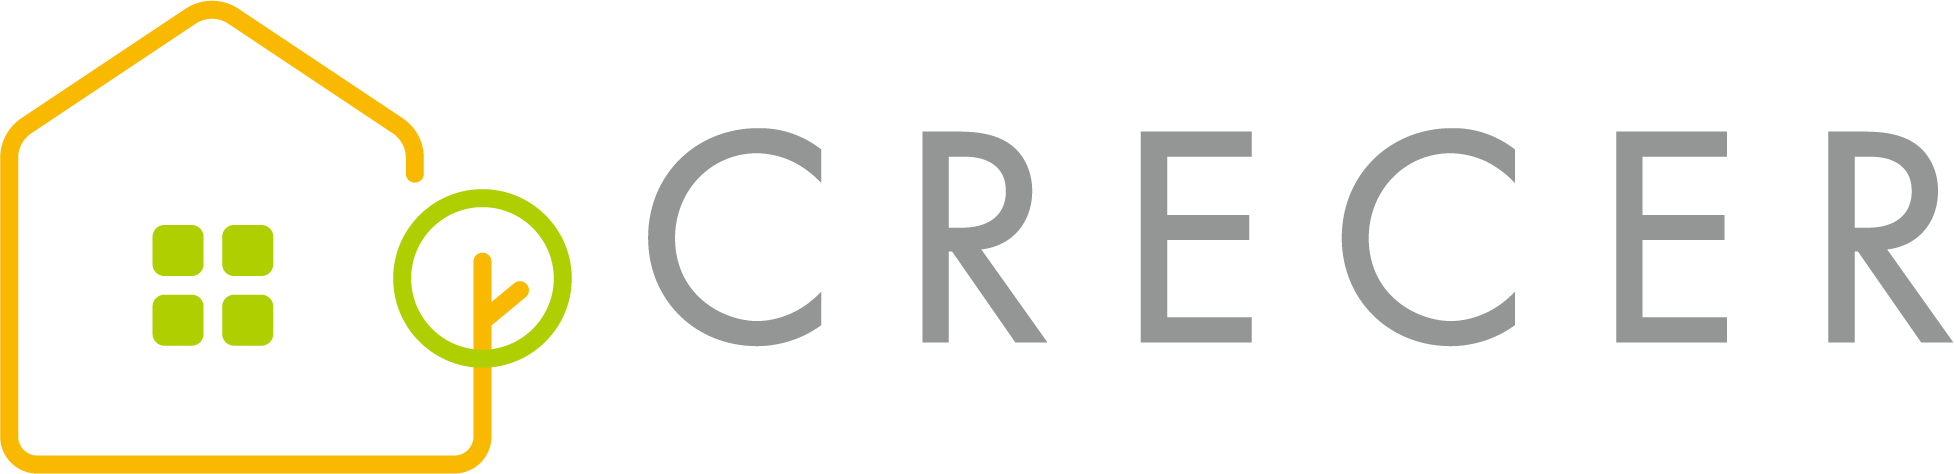 CRECER株式会社